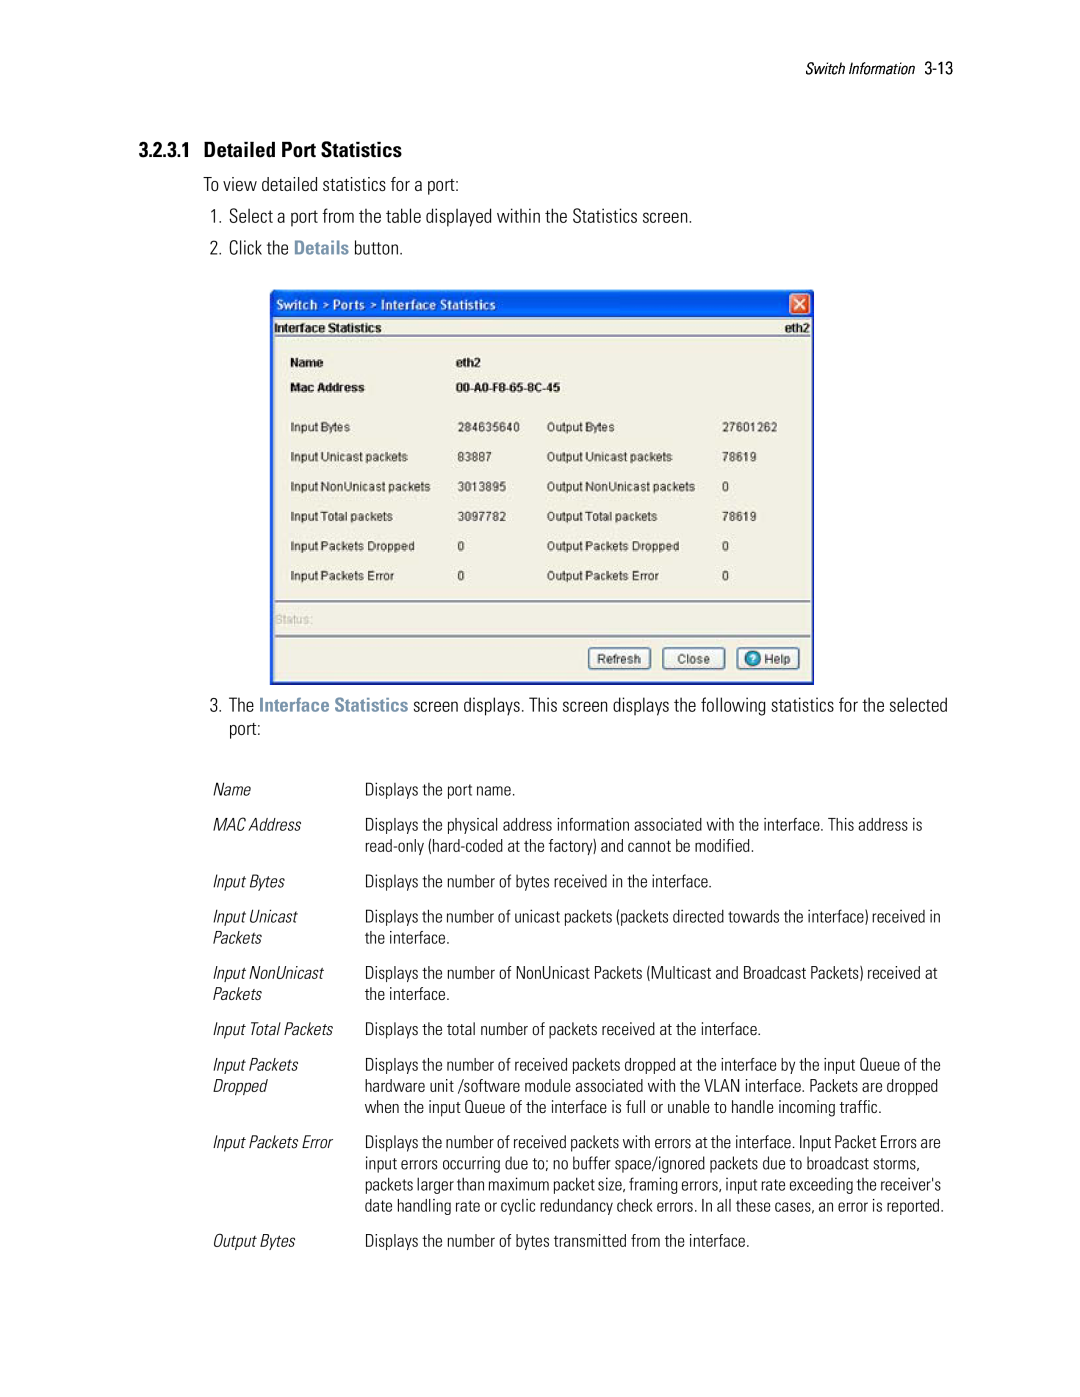 Motorola WS5100 manual 3.2.3.1Detailed Port Statistics, To view detailed statistics for a port, Click the Details button 